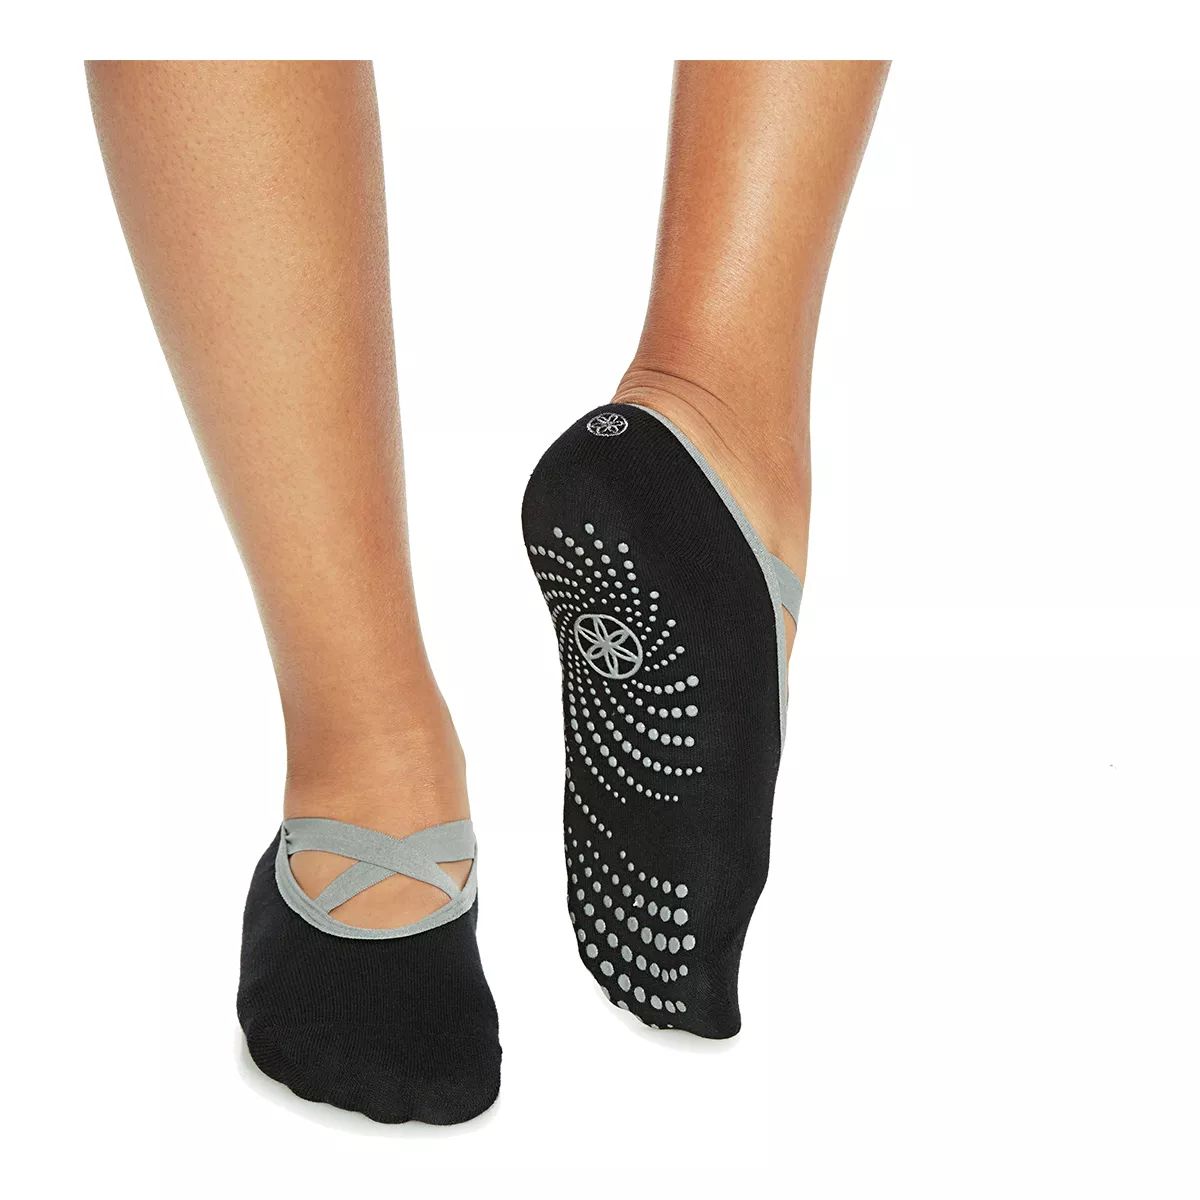 Gaiam Studio Select Yoga-Barre Socks - Black | SportChek